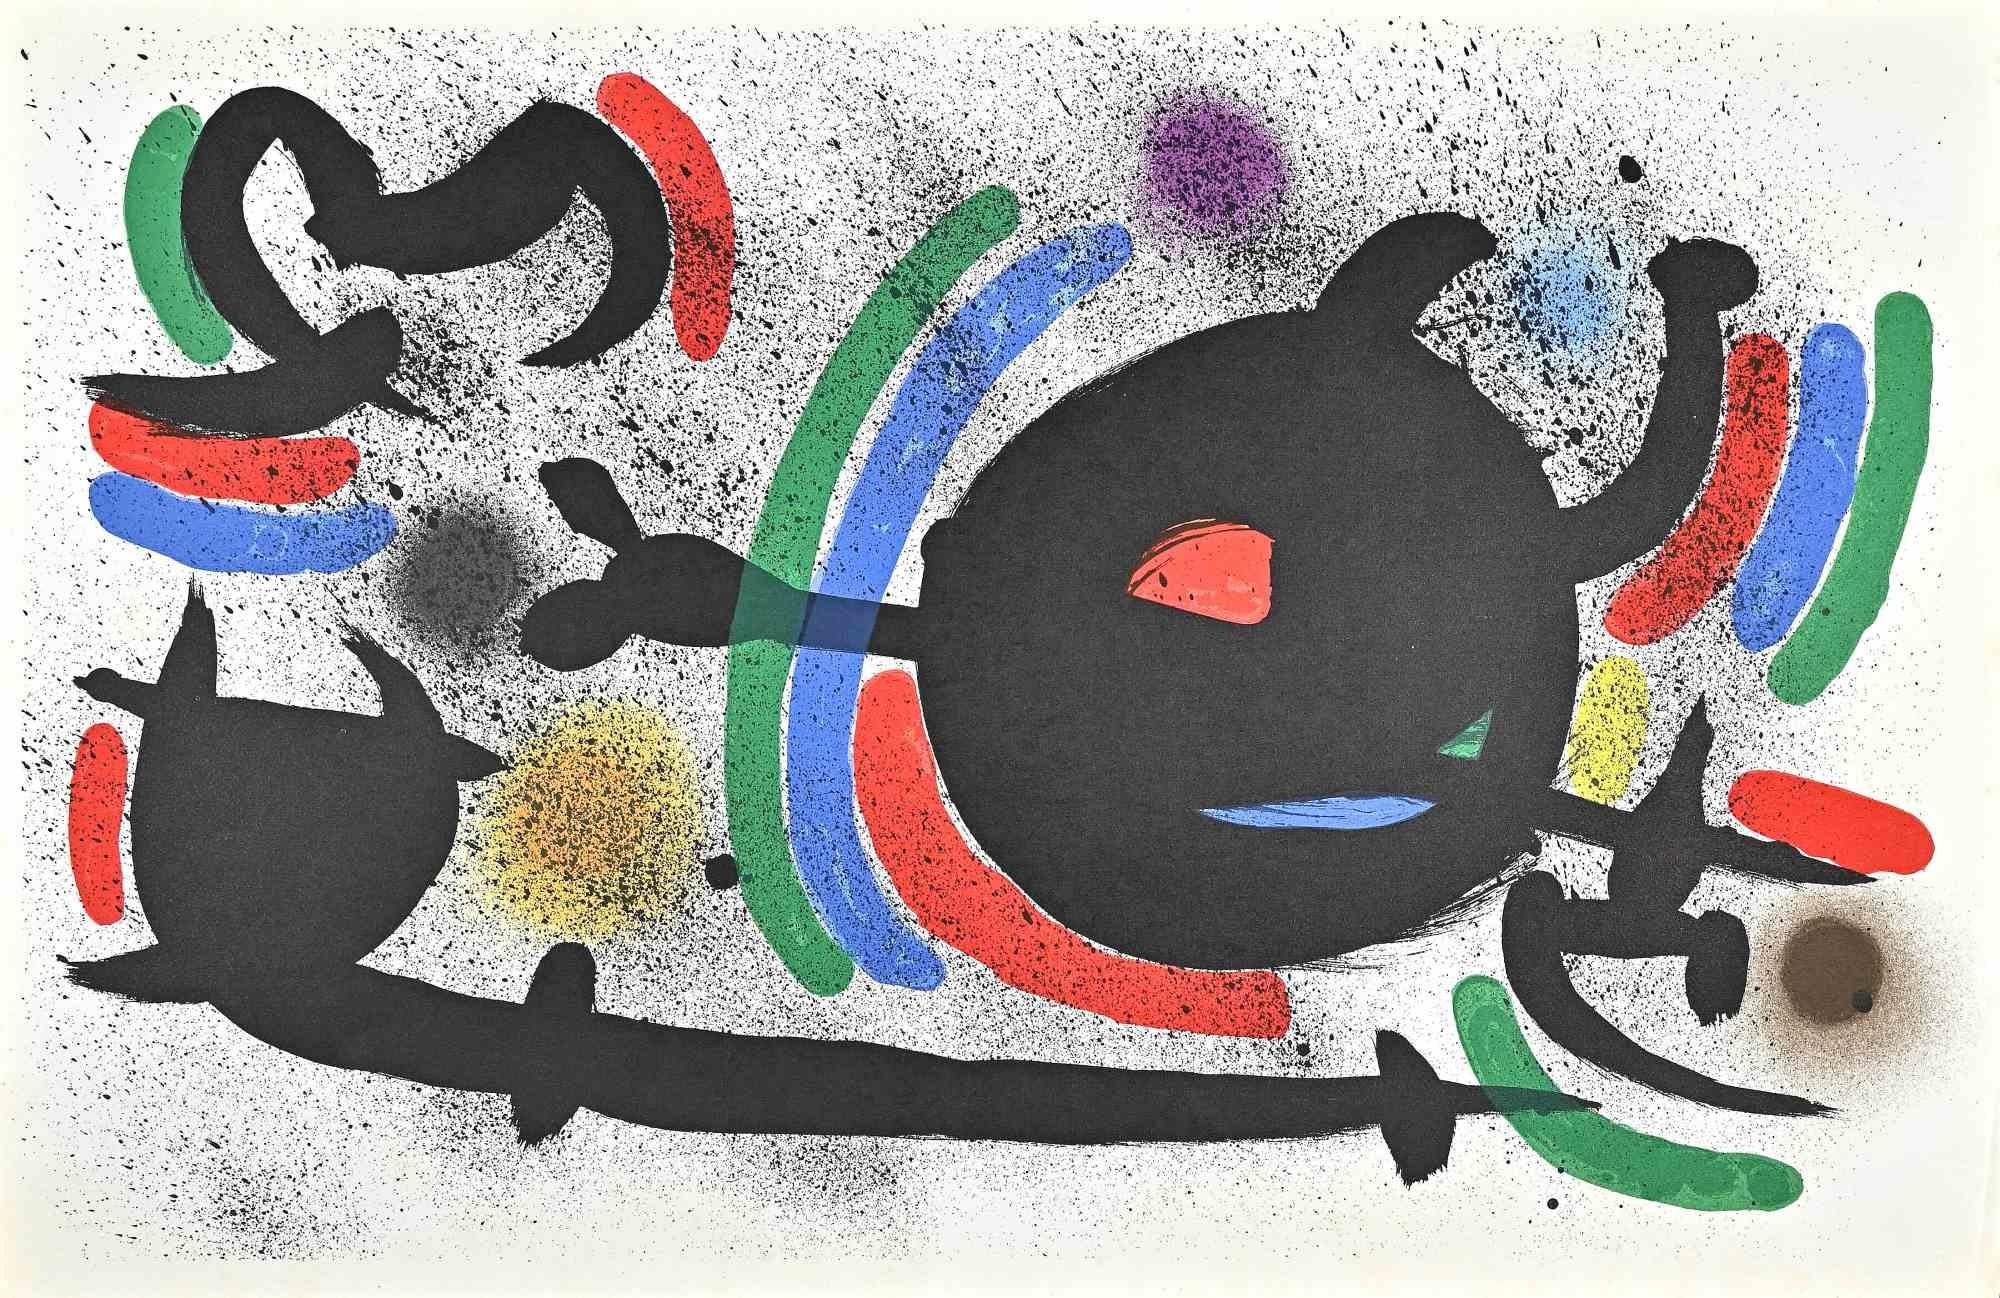 Abstract Print Joan Miró - Miró Lithographe I - Planche X - Lithographie de Joan Mirò - 1972